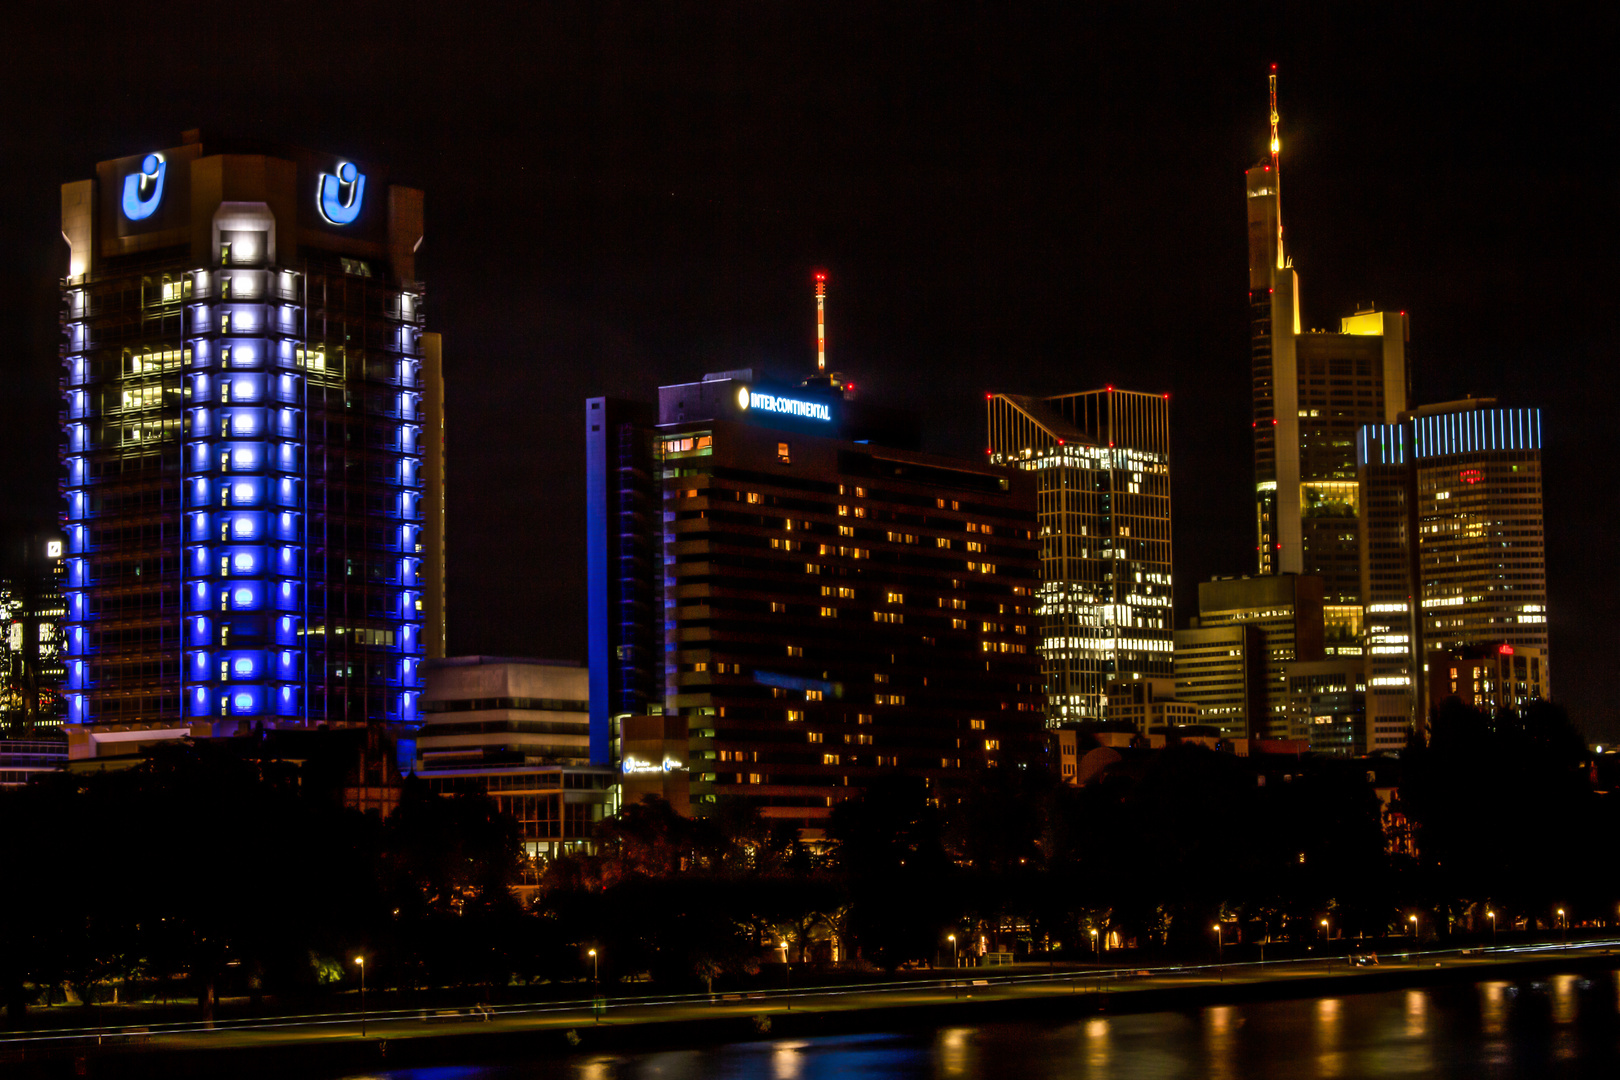 Frankfurt/Main At Night